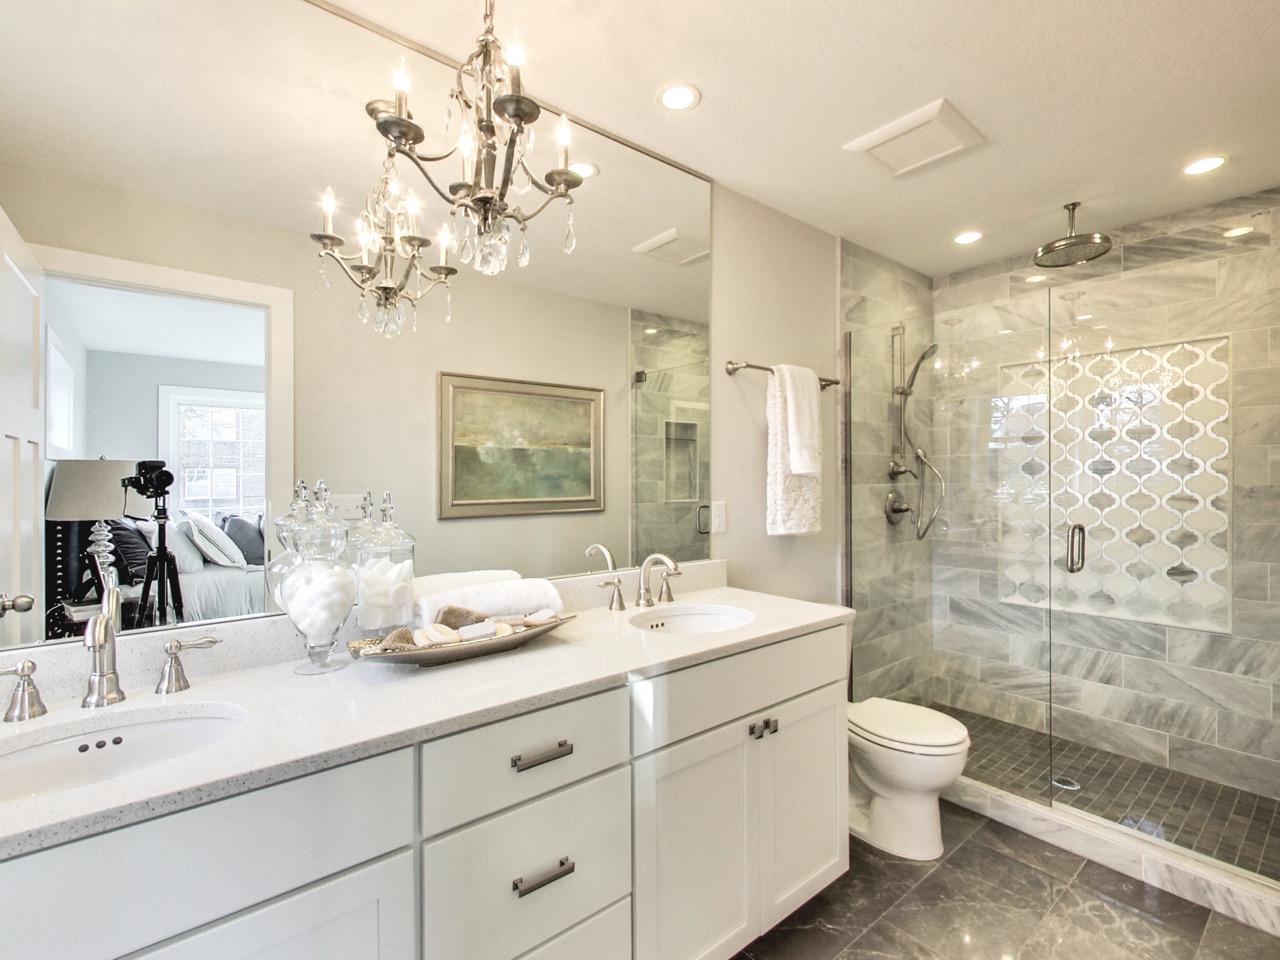 Bathroom Chandelier Ideas: 10 Opulent Lighting Styles